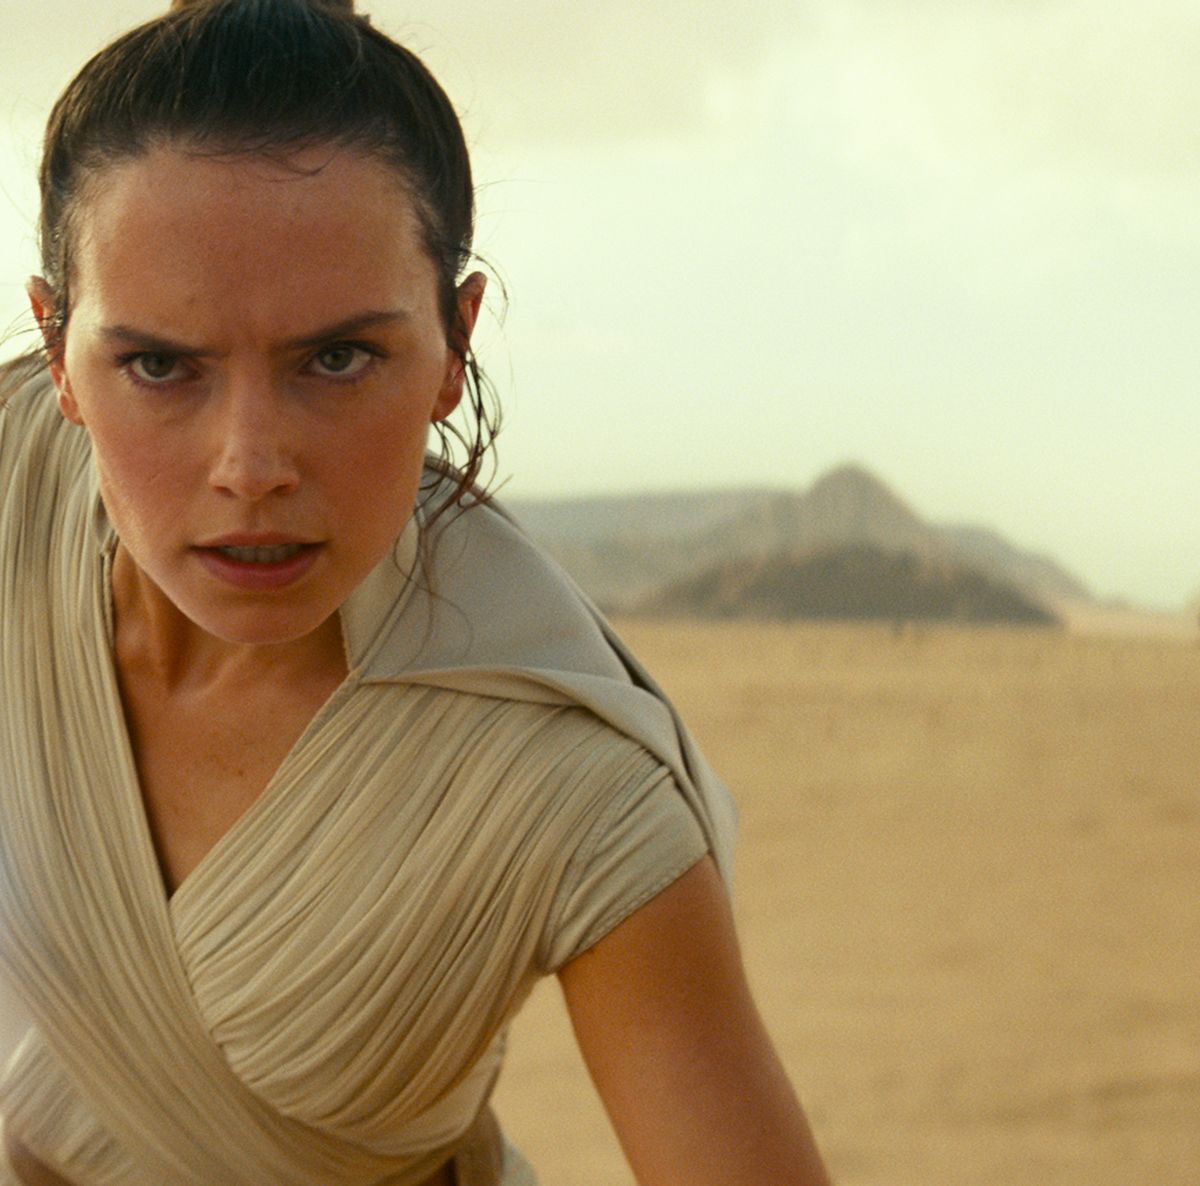 Latest Star Wars Film Gets Best 4K Price to Date